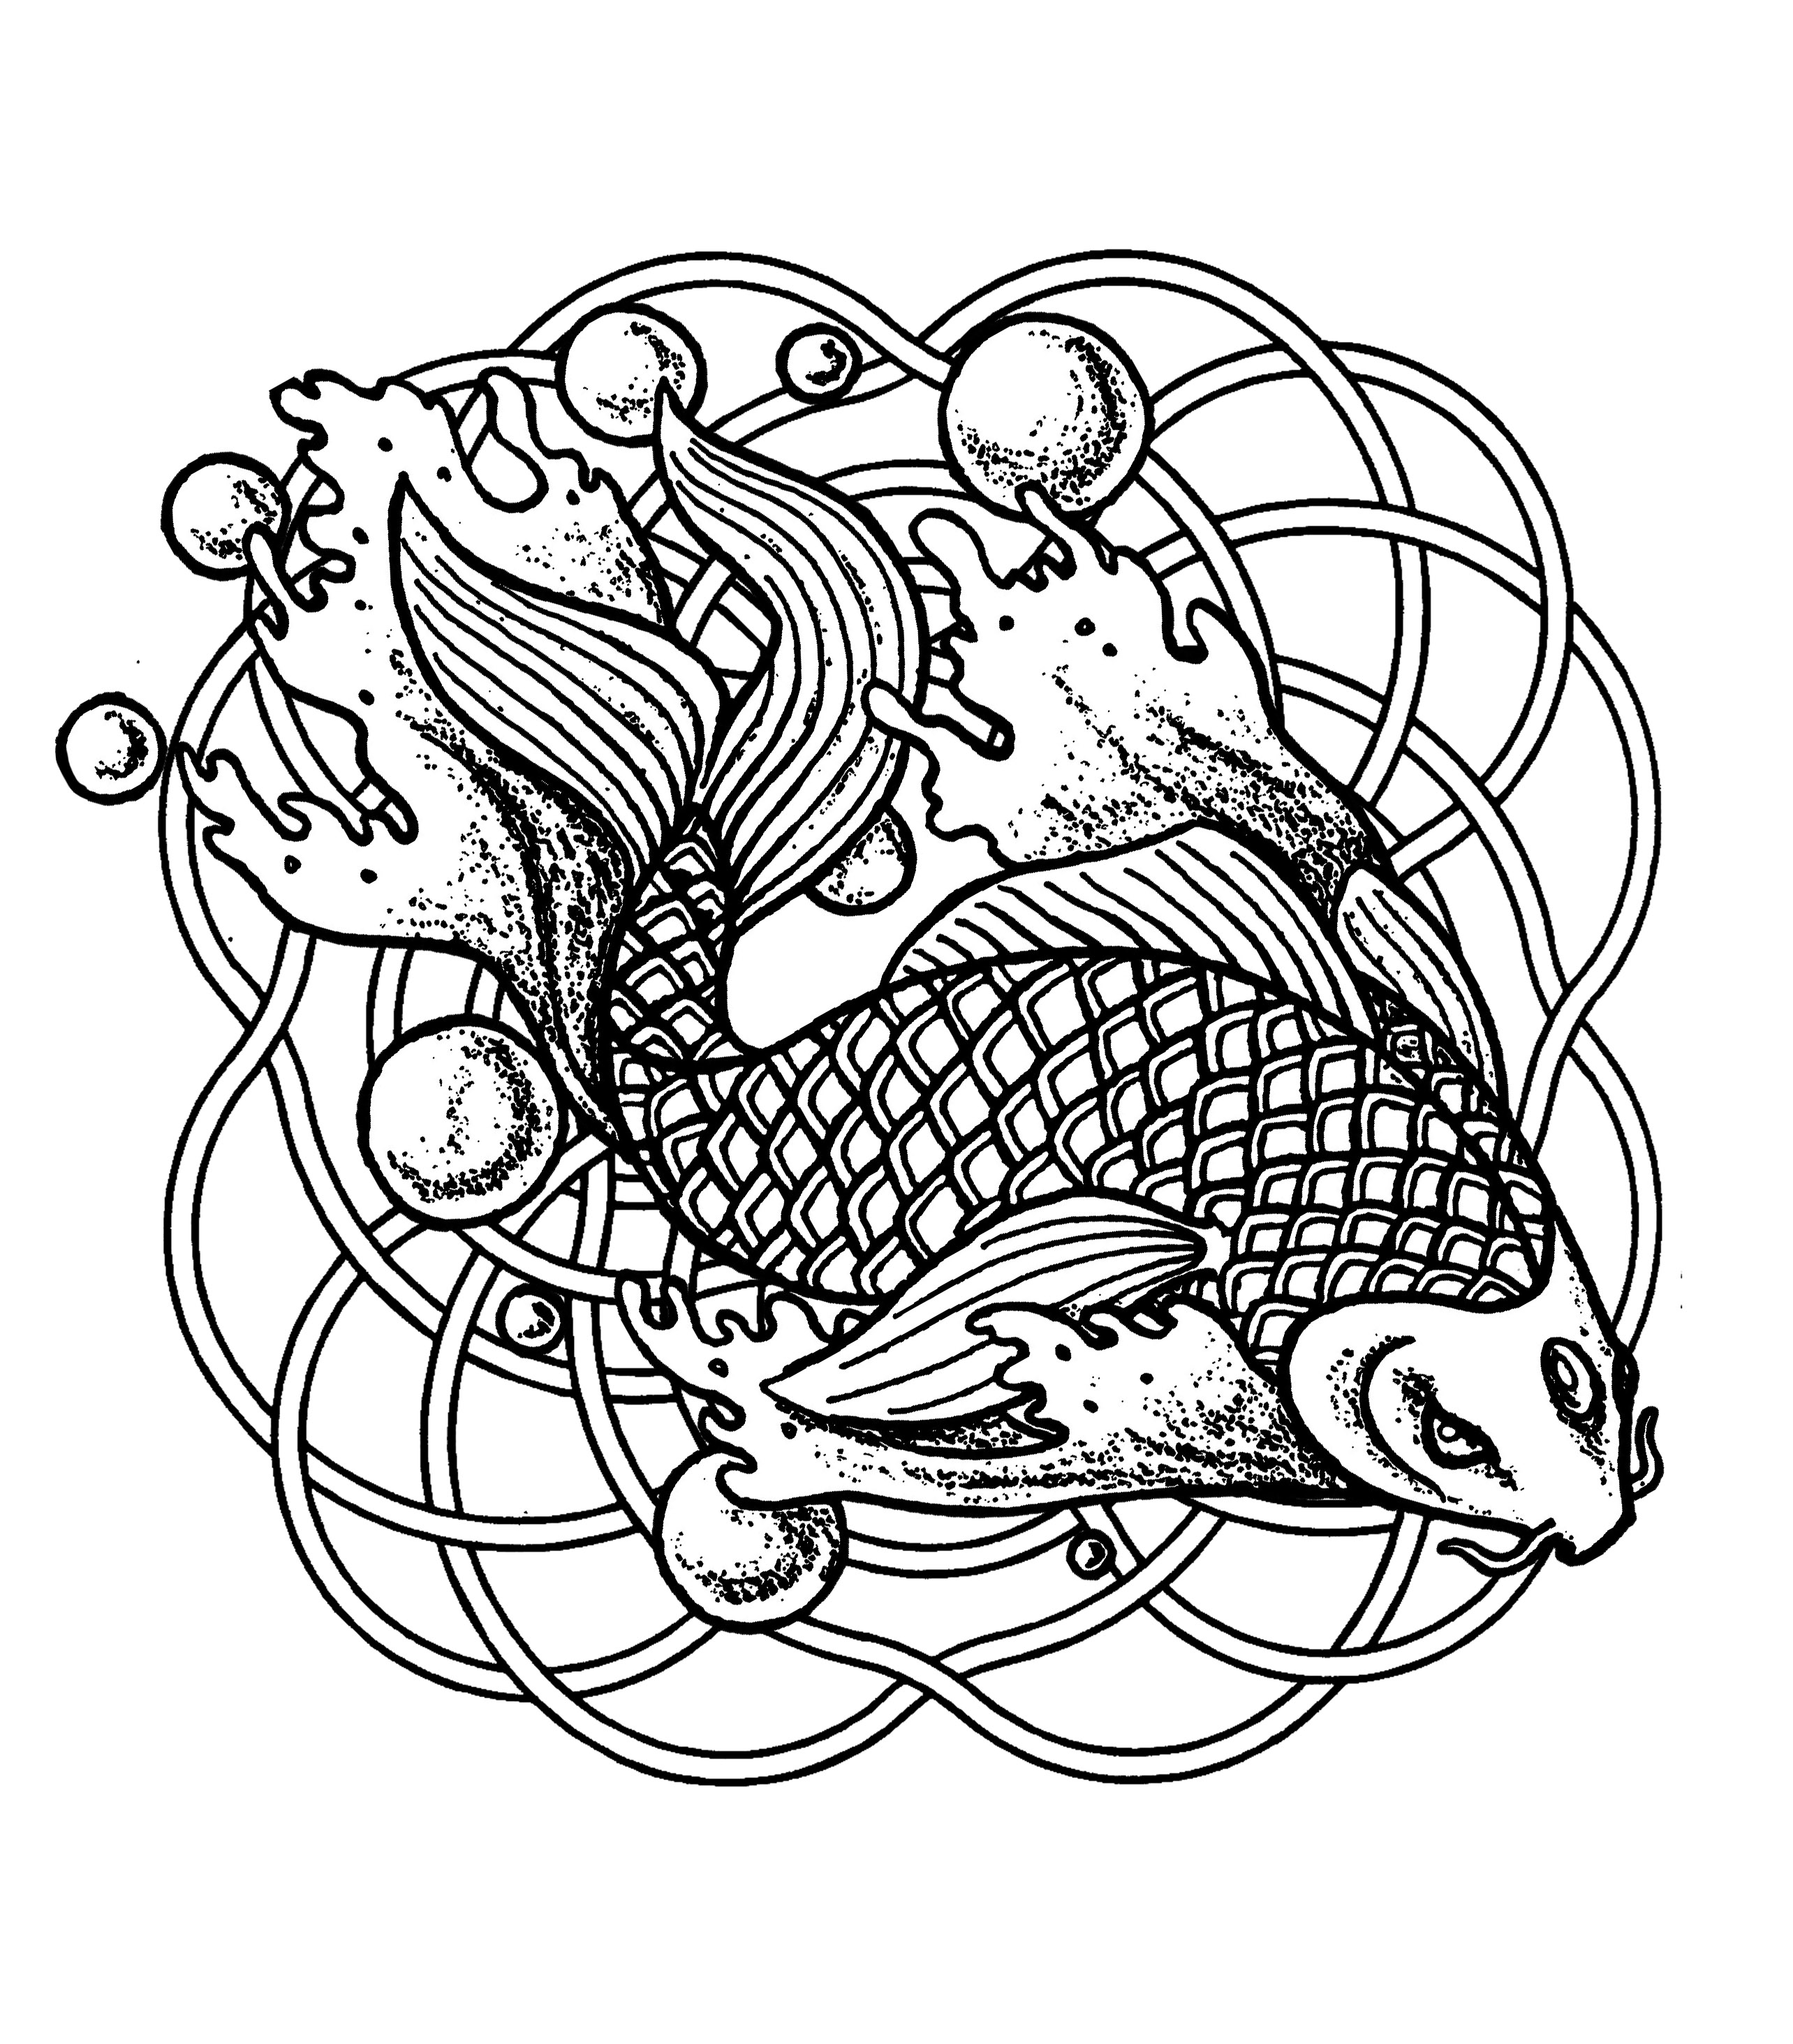 Un Mandala comportant un poisson style chinois